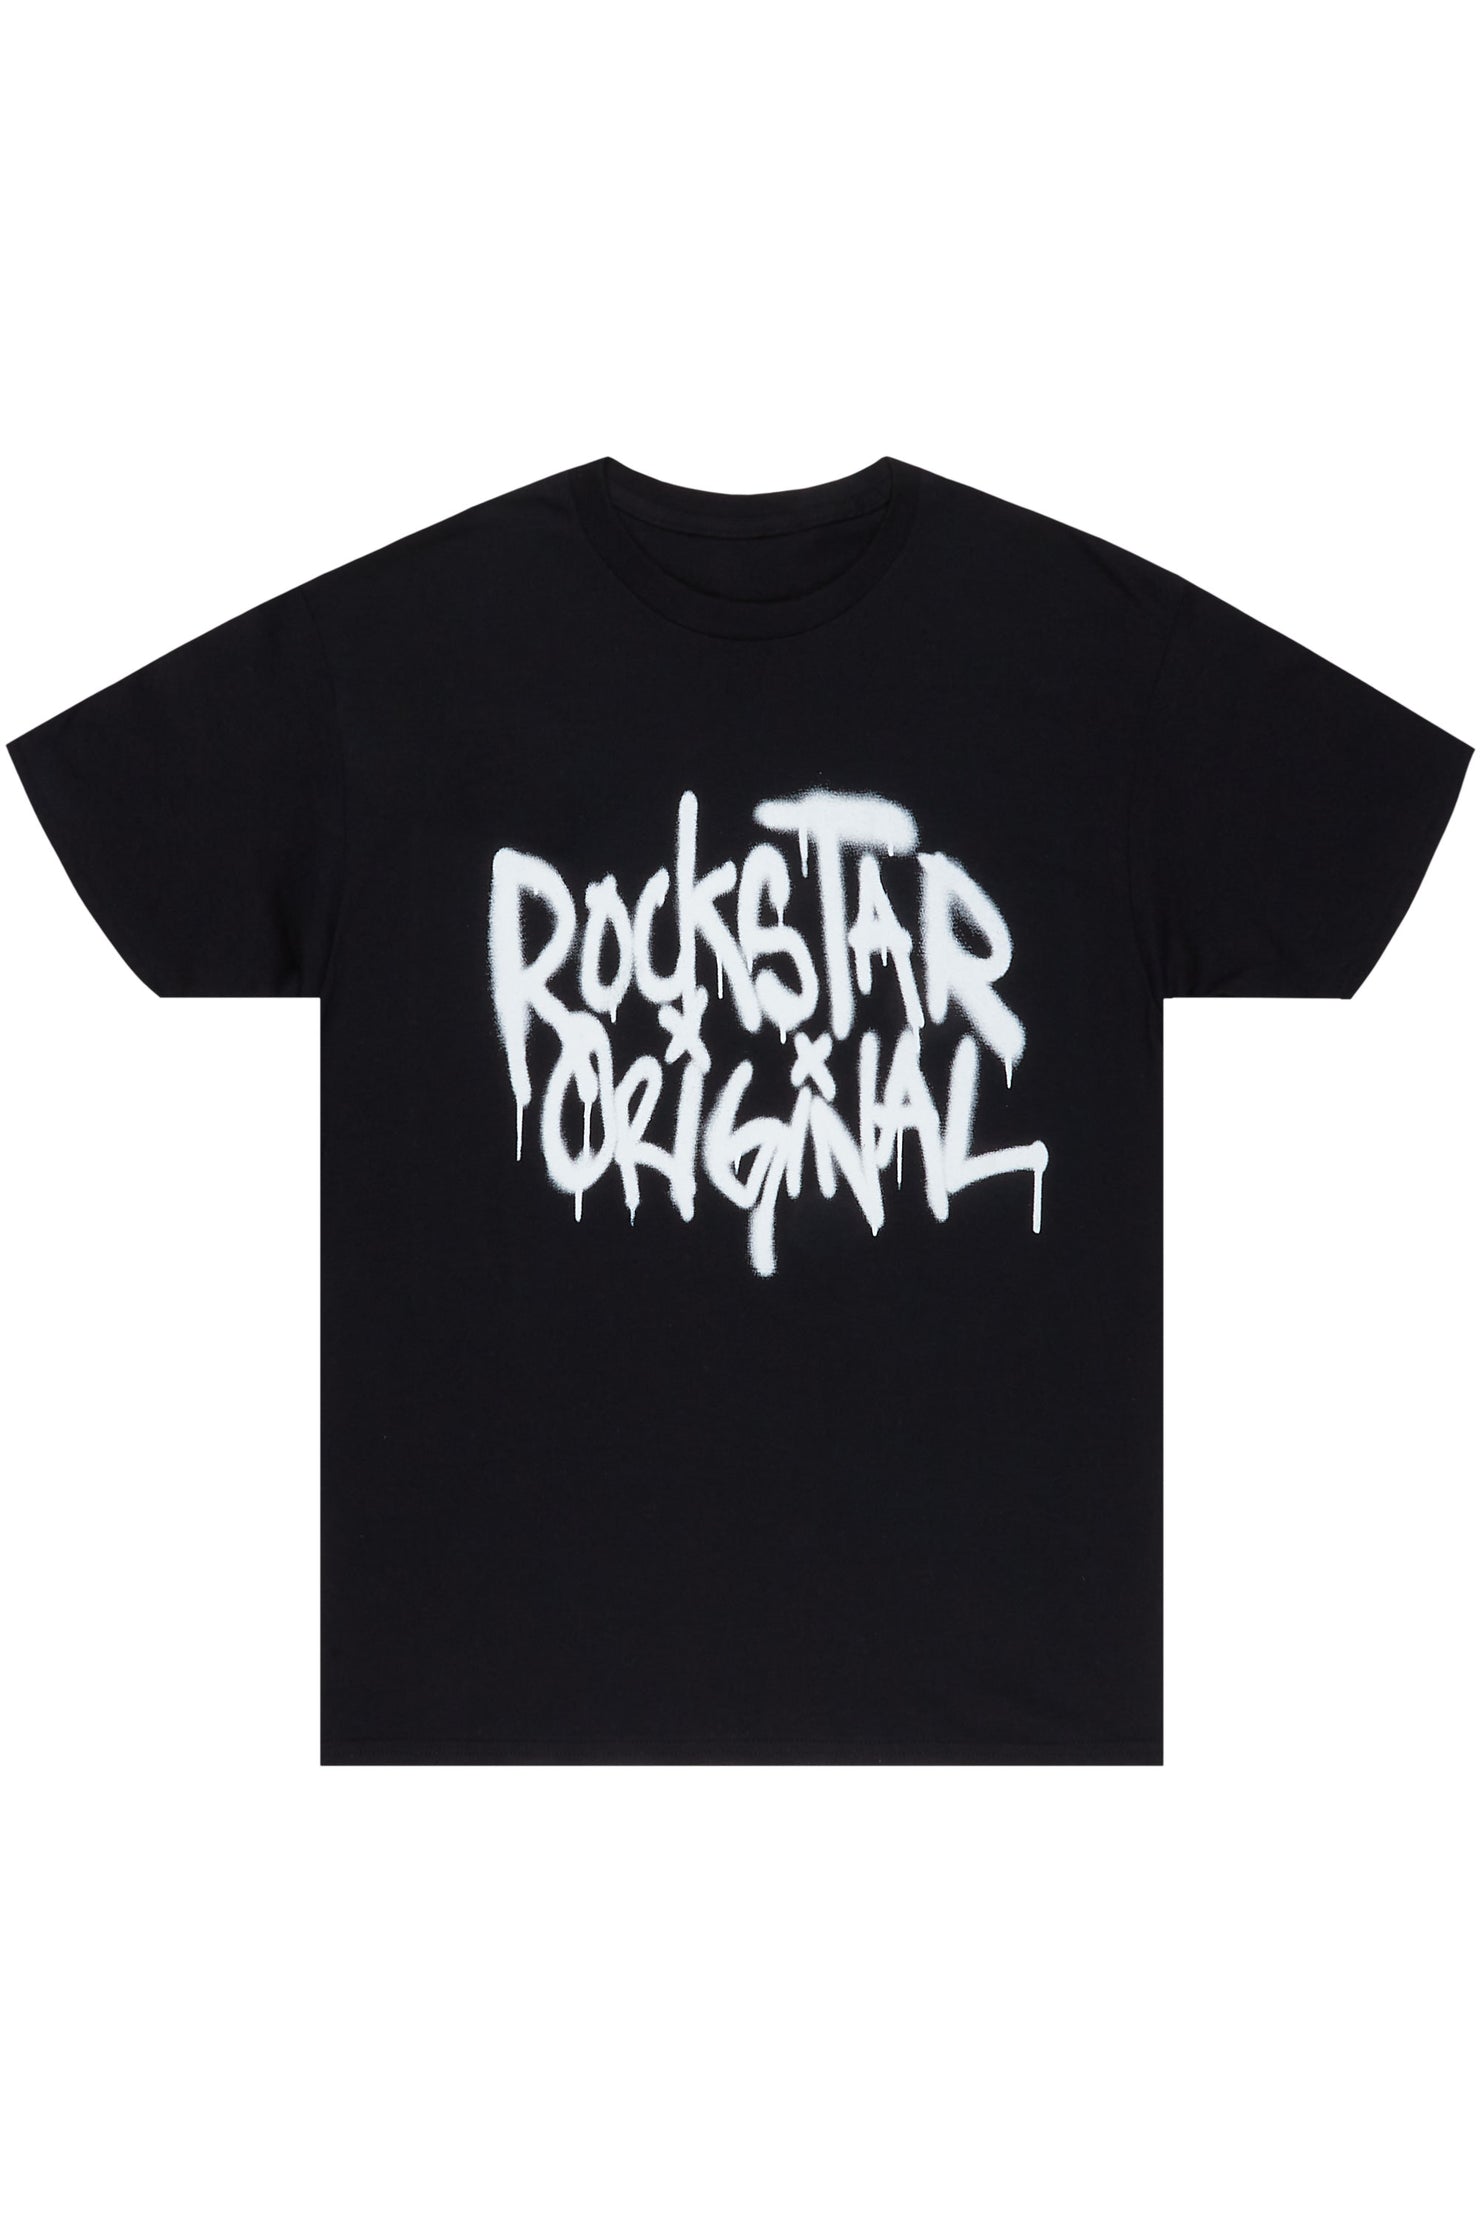 Nytron Black Graphic T-Shirt